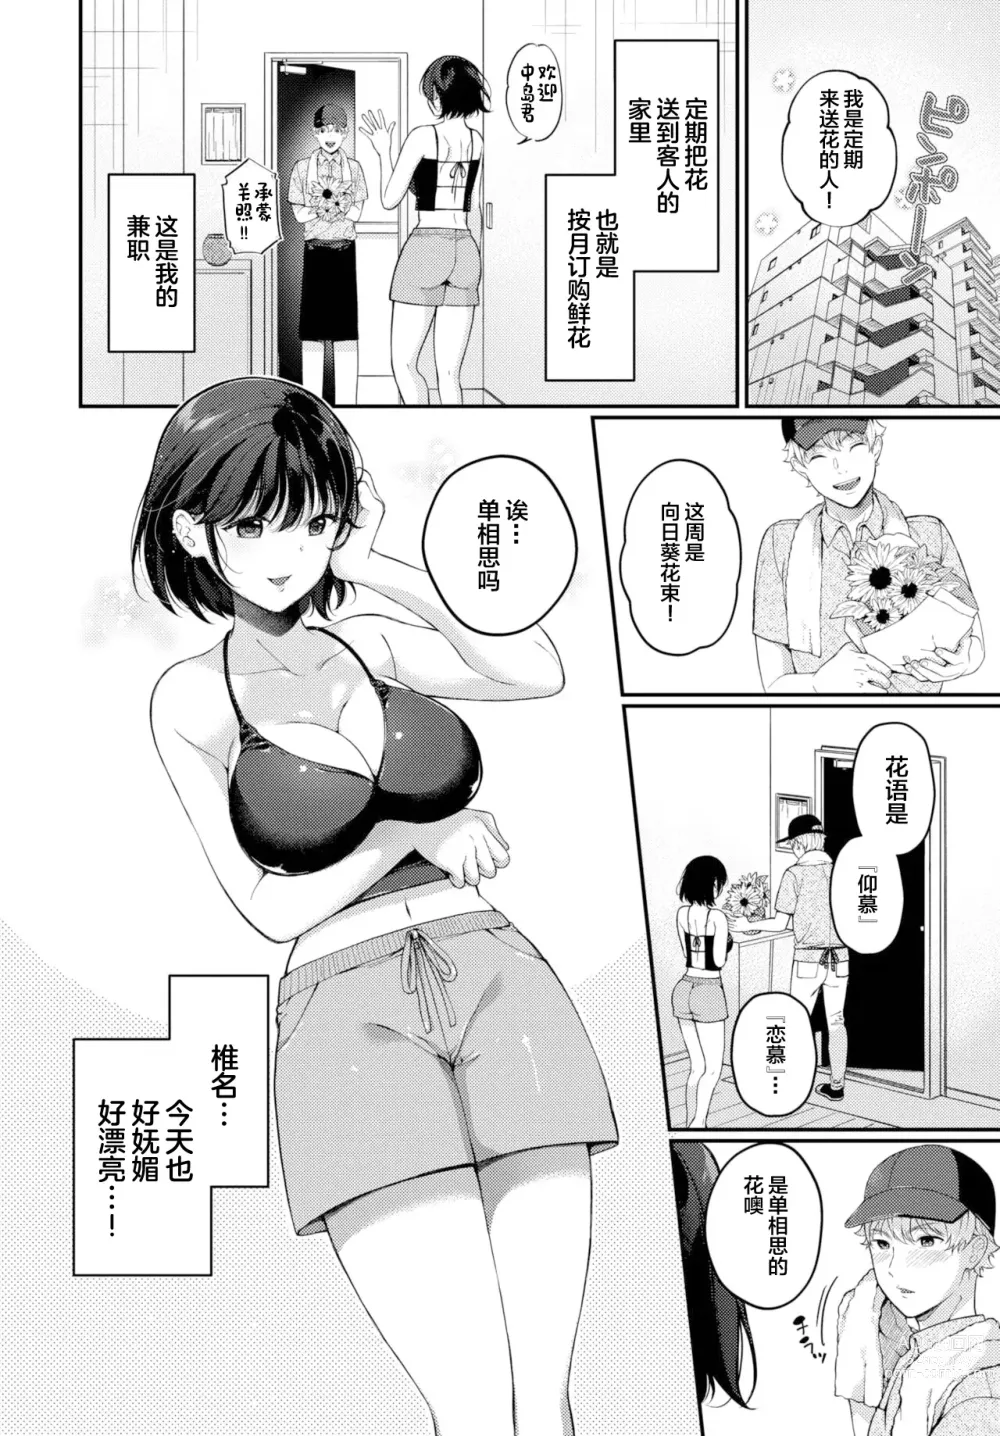 Page 2 of manga Hanakotoba o Anata e - Flower language for you.